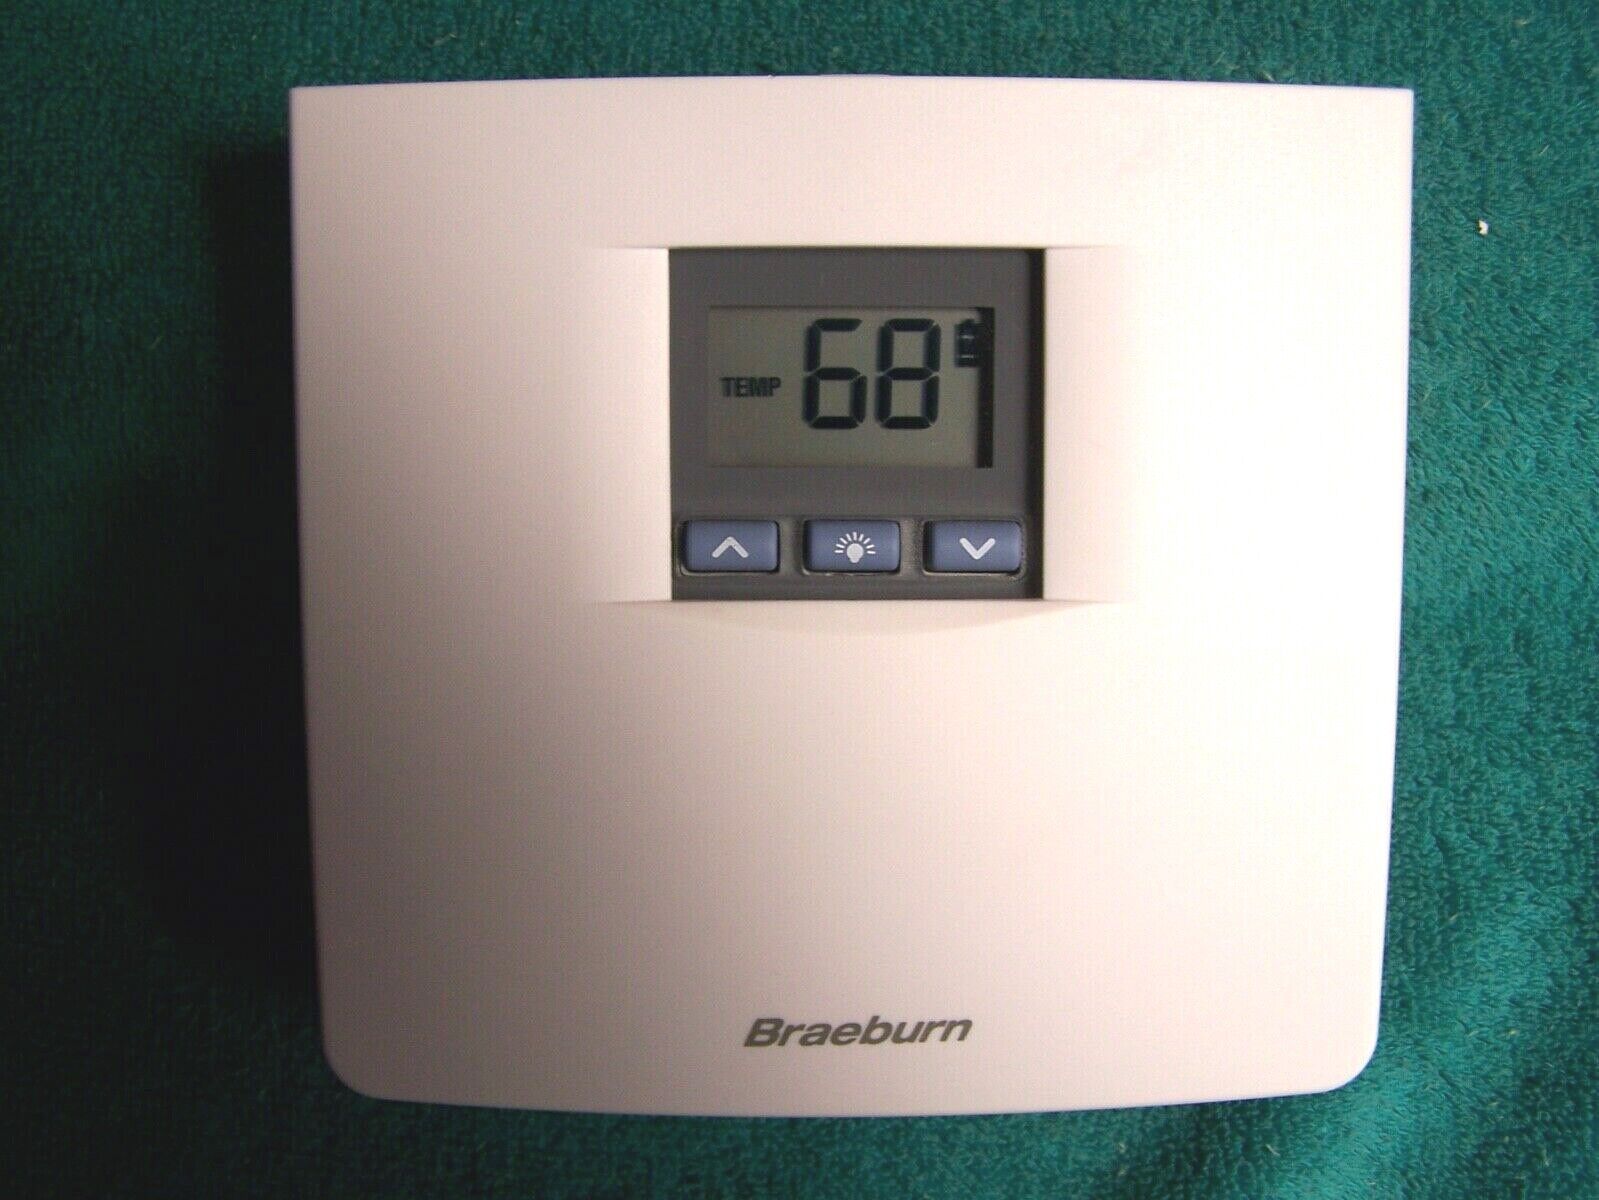  Braeburn 3000 1 Heat 1 Cool  Non-Programmable backlit thermostat